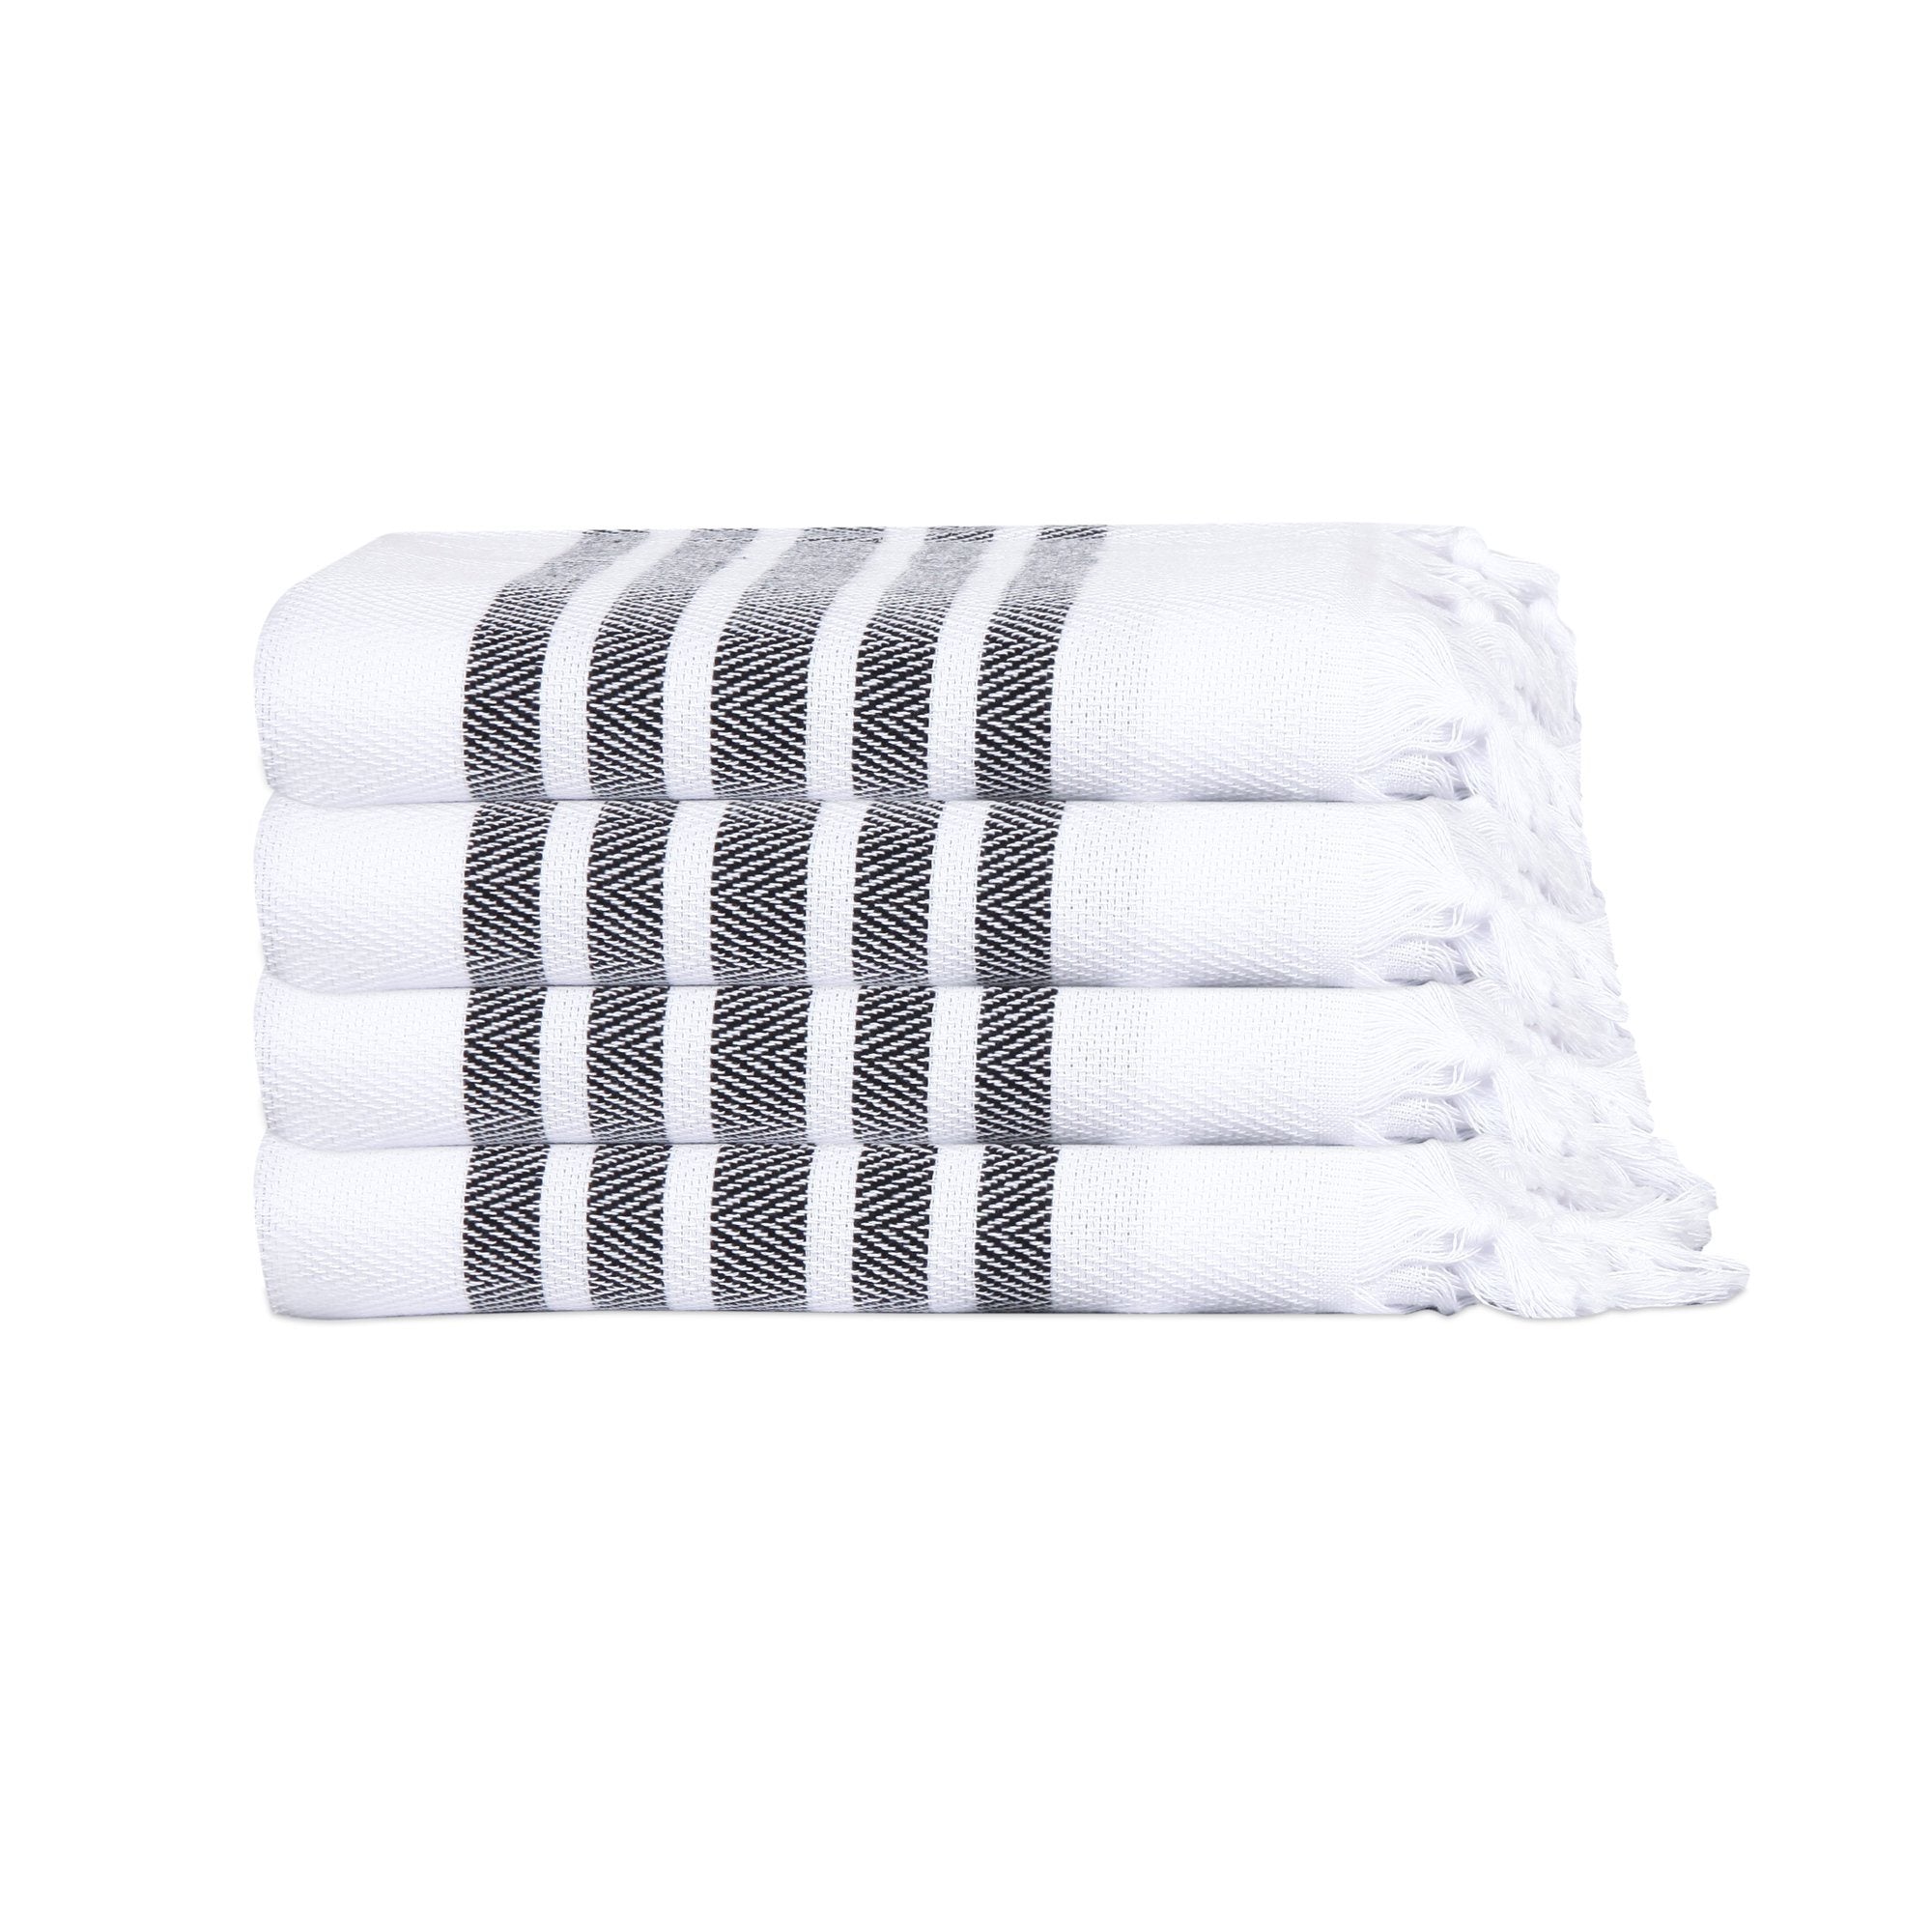 Turkish Towels Herringbone Turkish Towel - Black